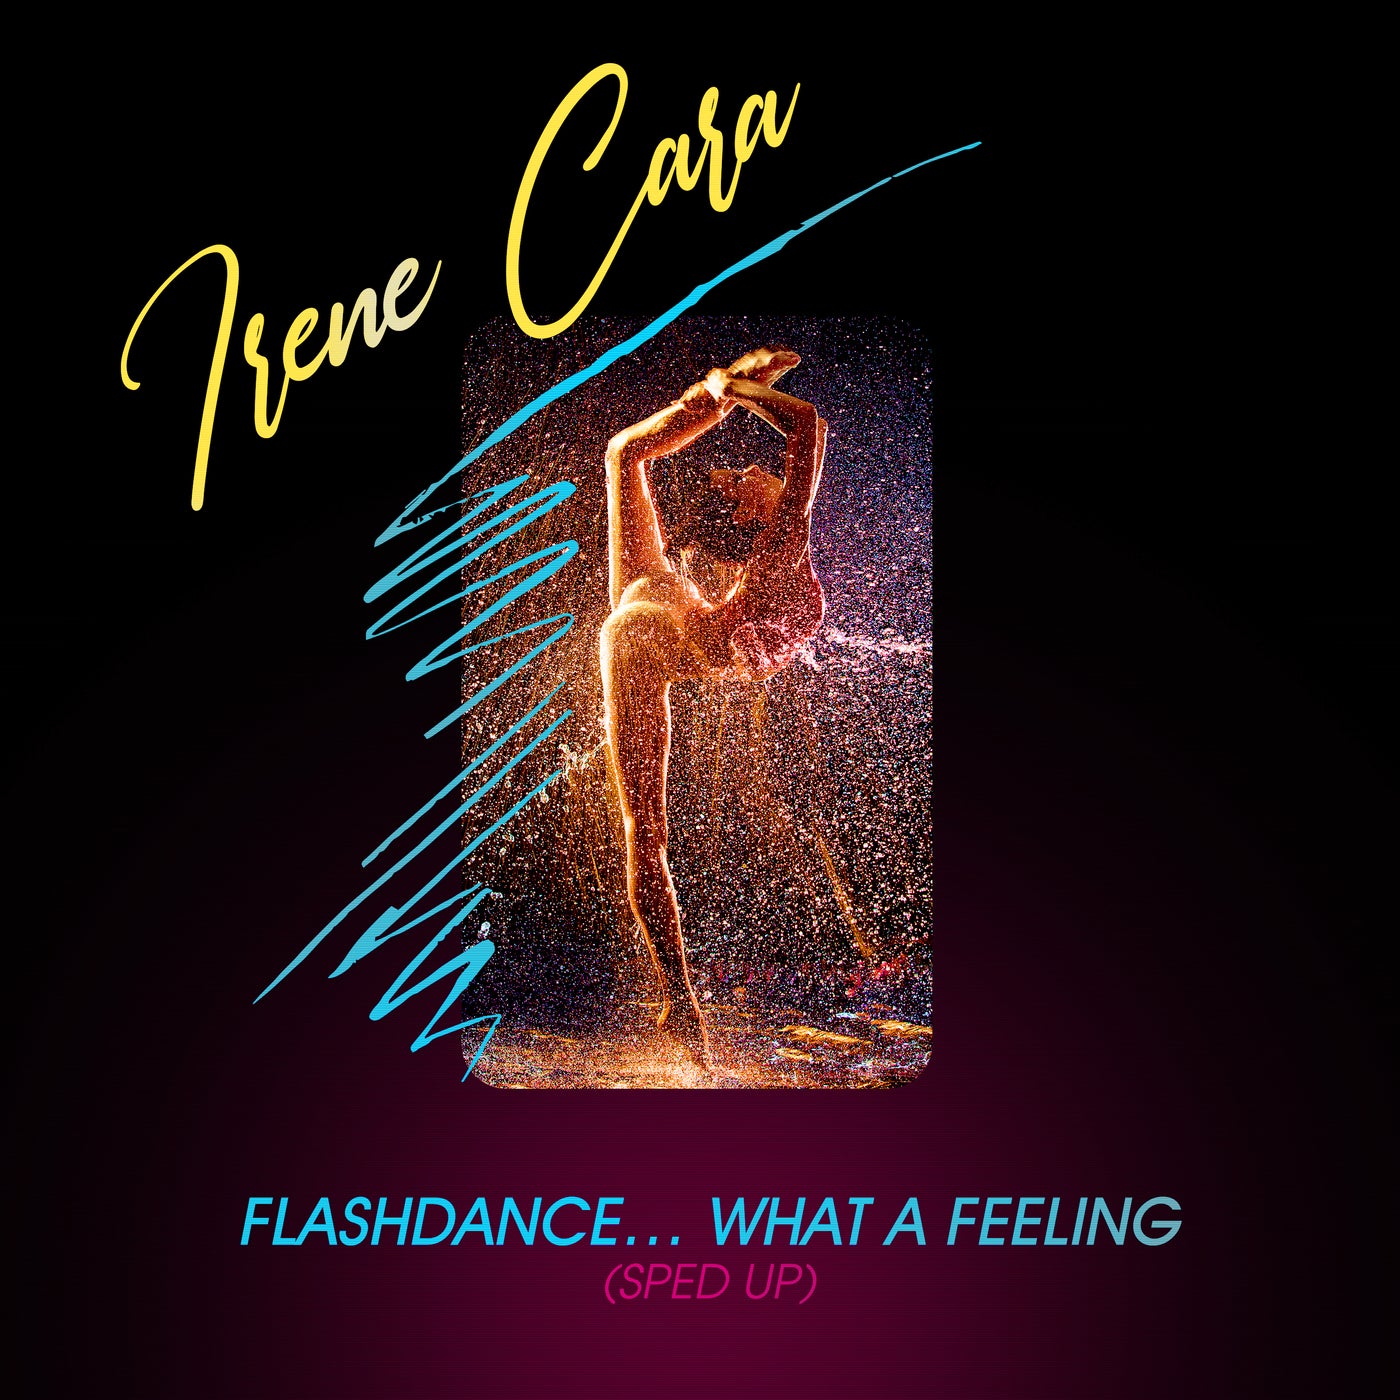 Giorgio Moroder Irene cara - Flashdance... What a feeling.mp3. Flashdance what a feeling